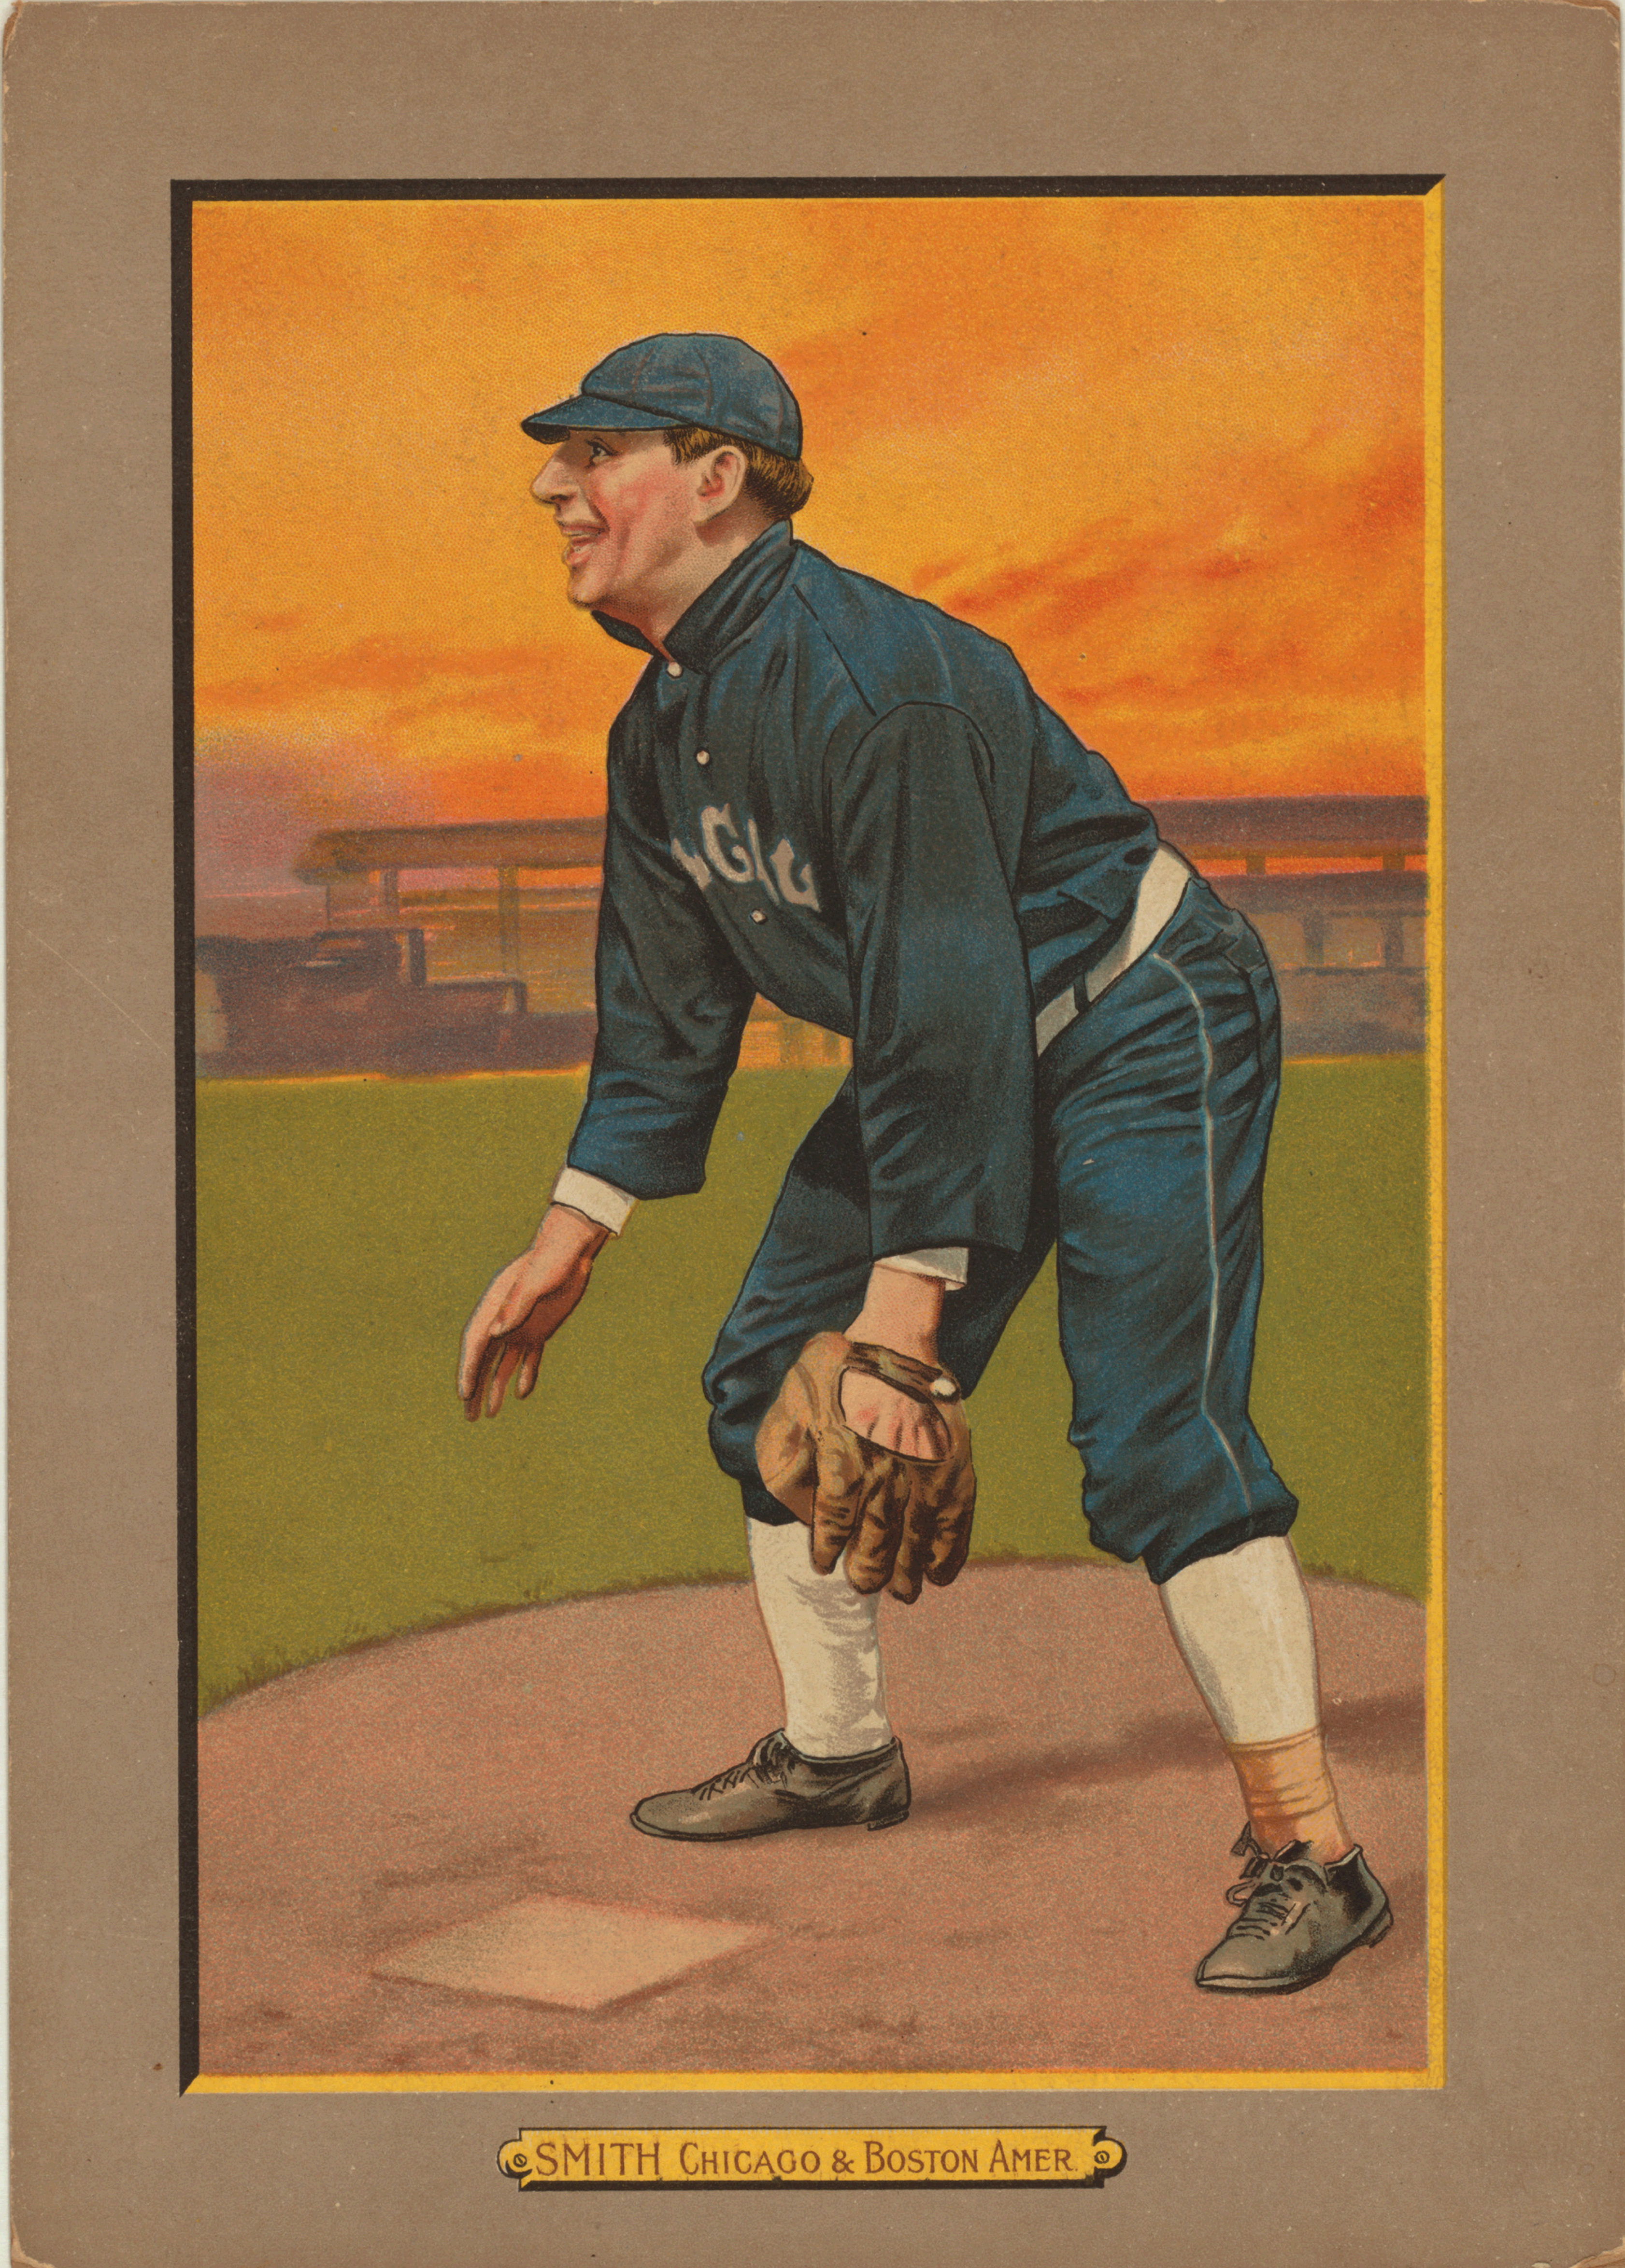 Baseball Card Titled ‘Smith - Chicago &amp; Boston Amer.’